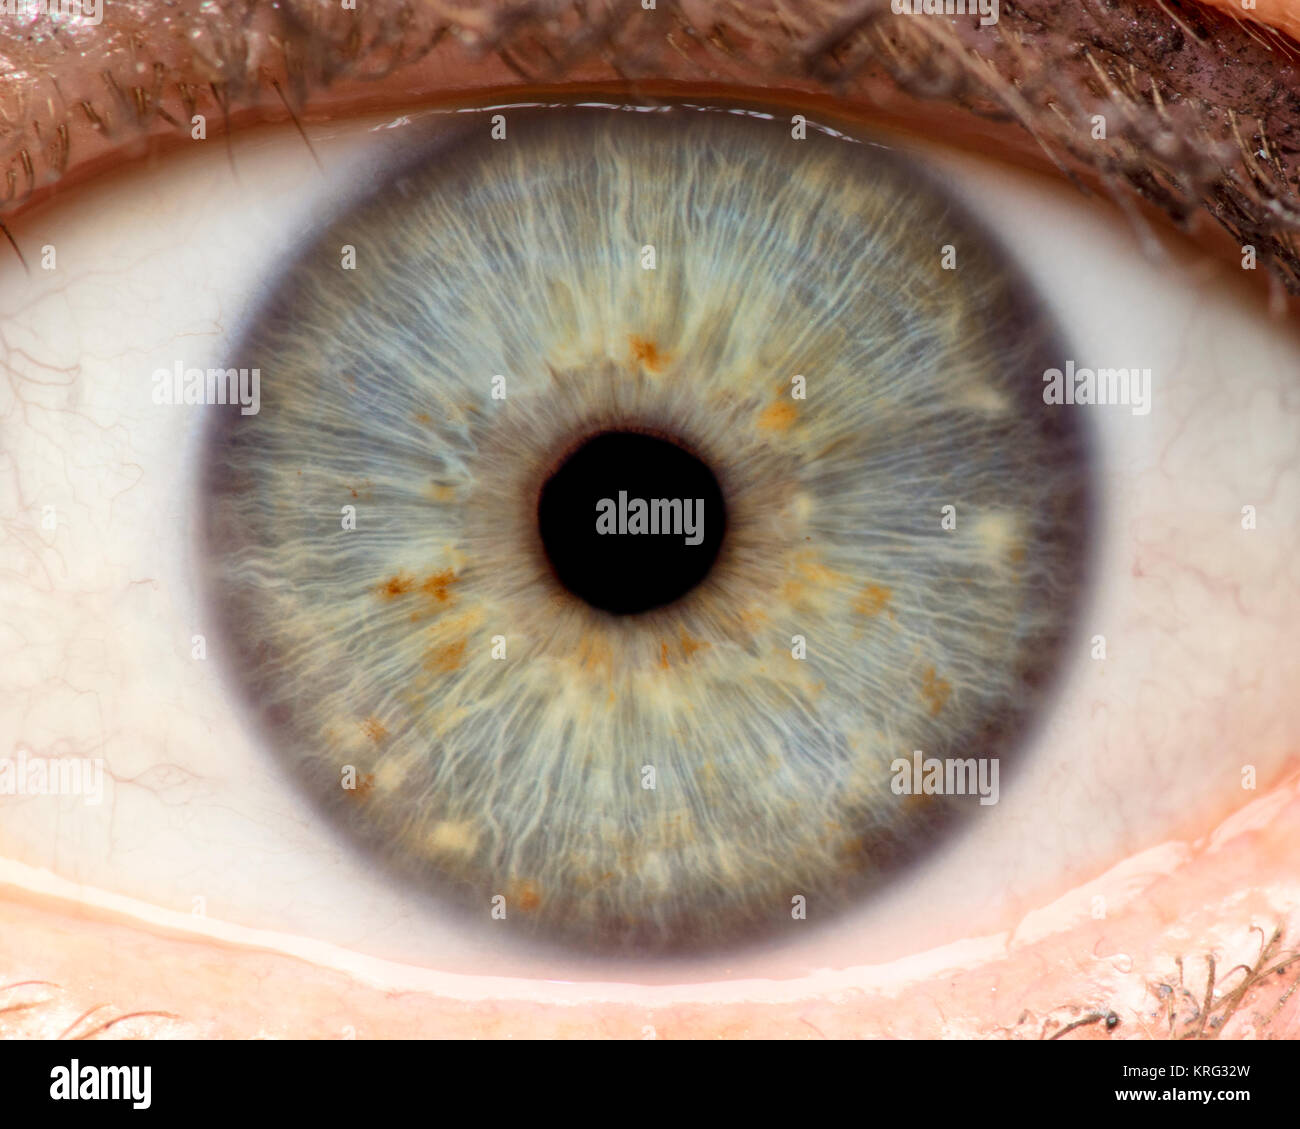 Macro photo of human eye, iris, pupil, eye lashes, eye lids. Stock Photo